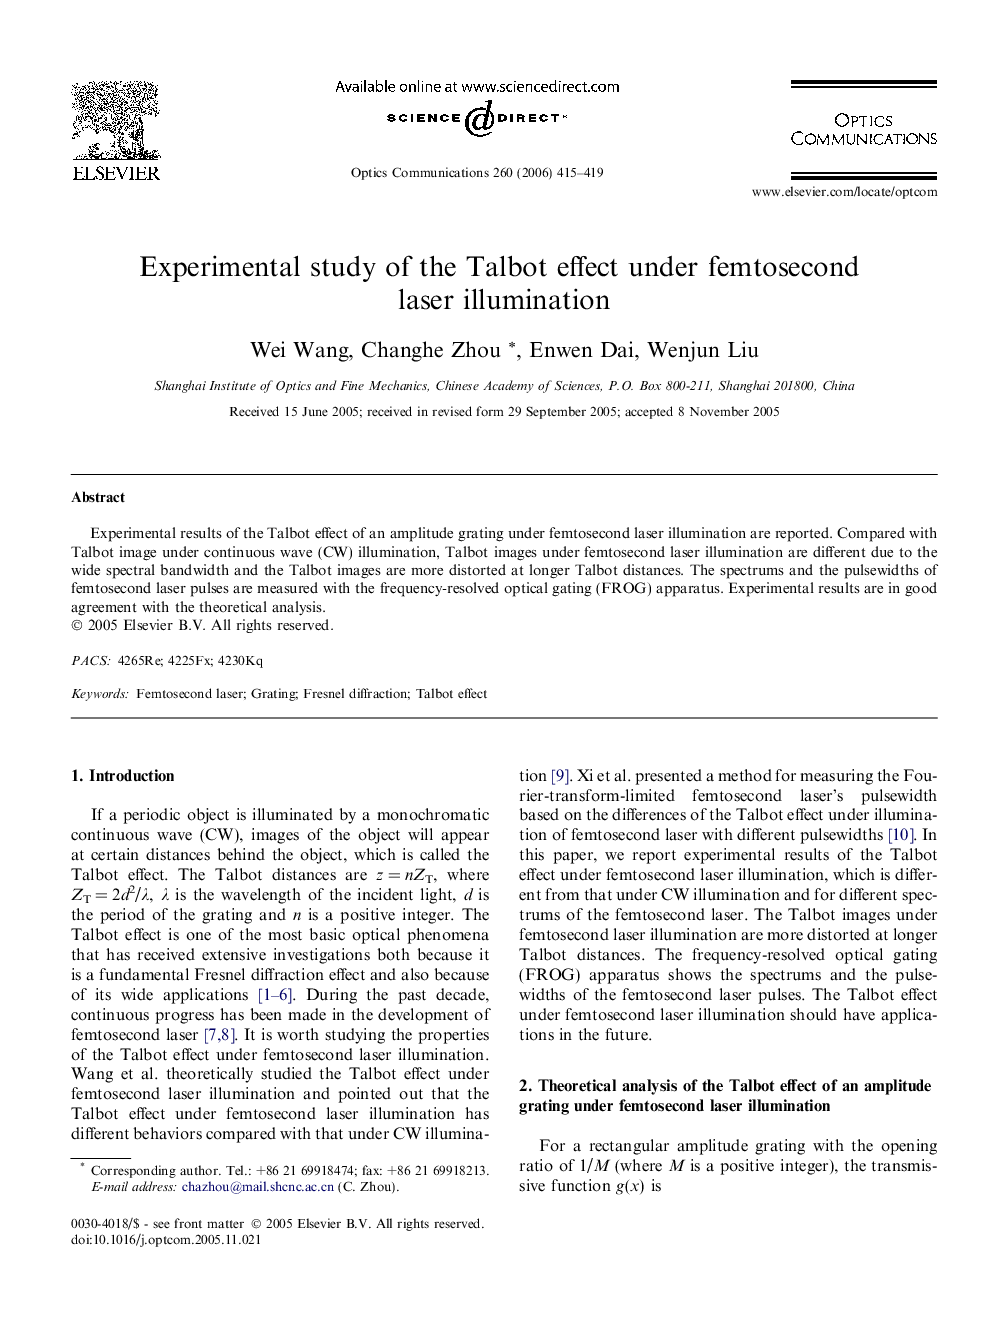 Experimental study of the Talbot effect under femtosecond laser illumination